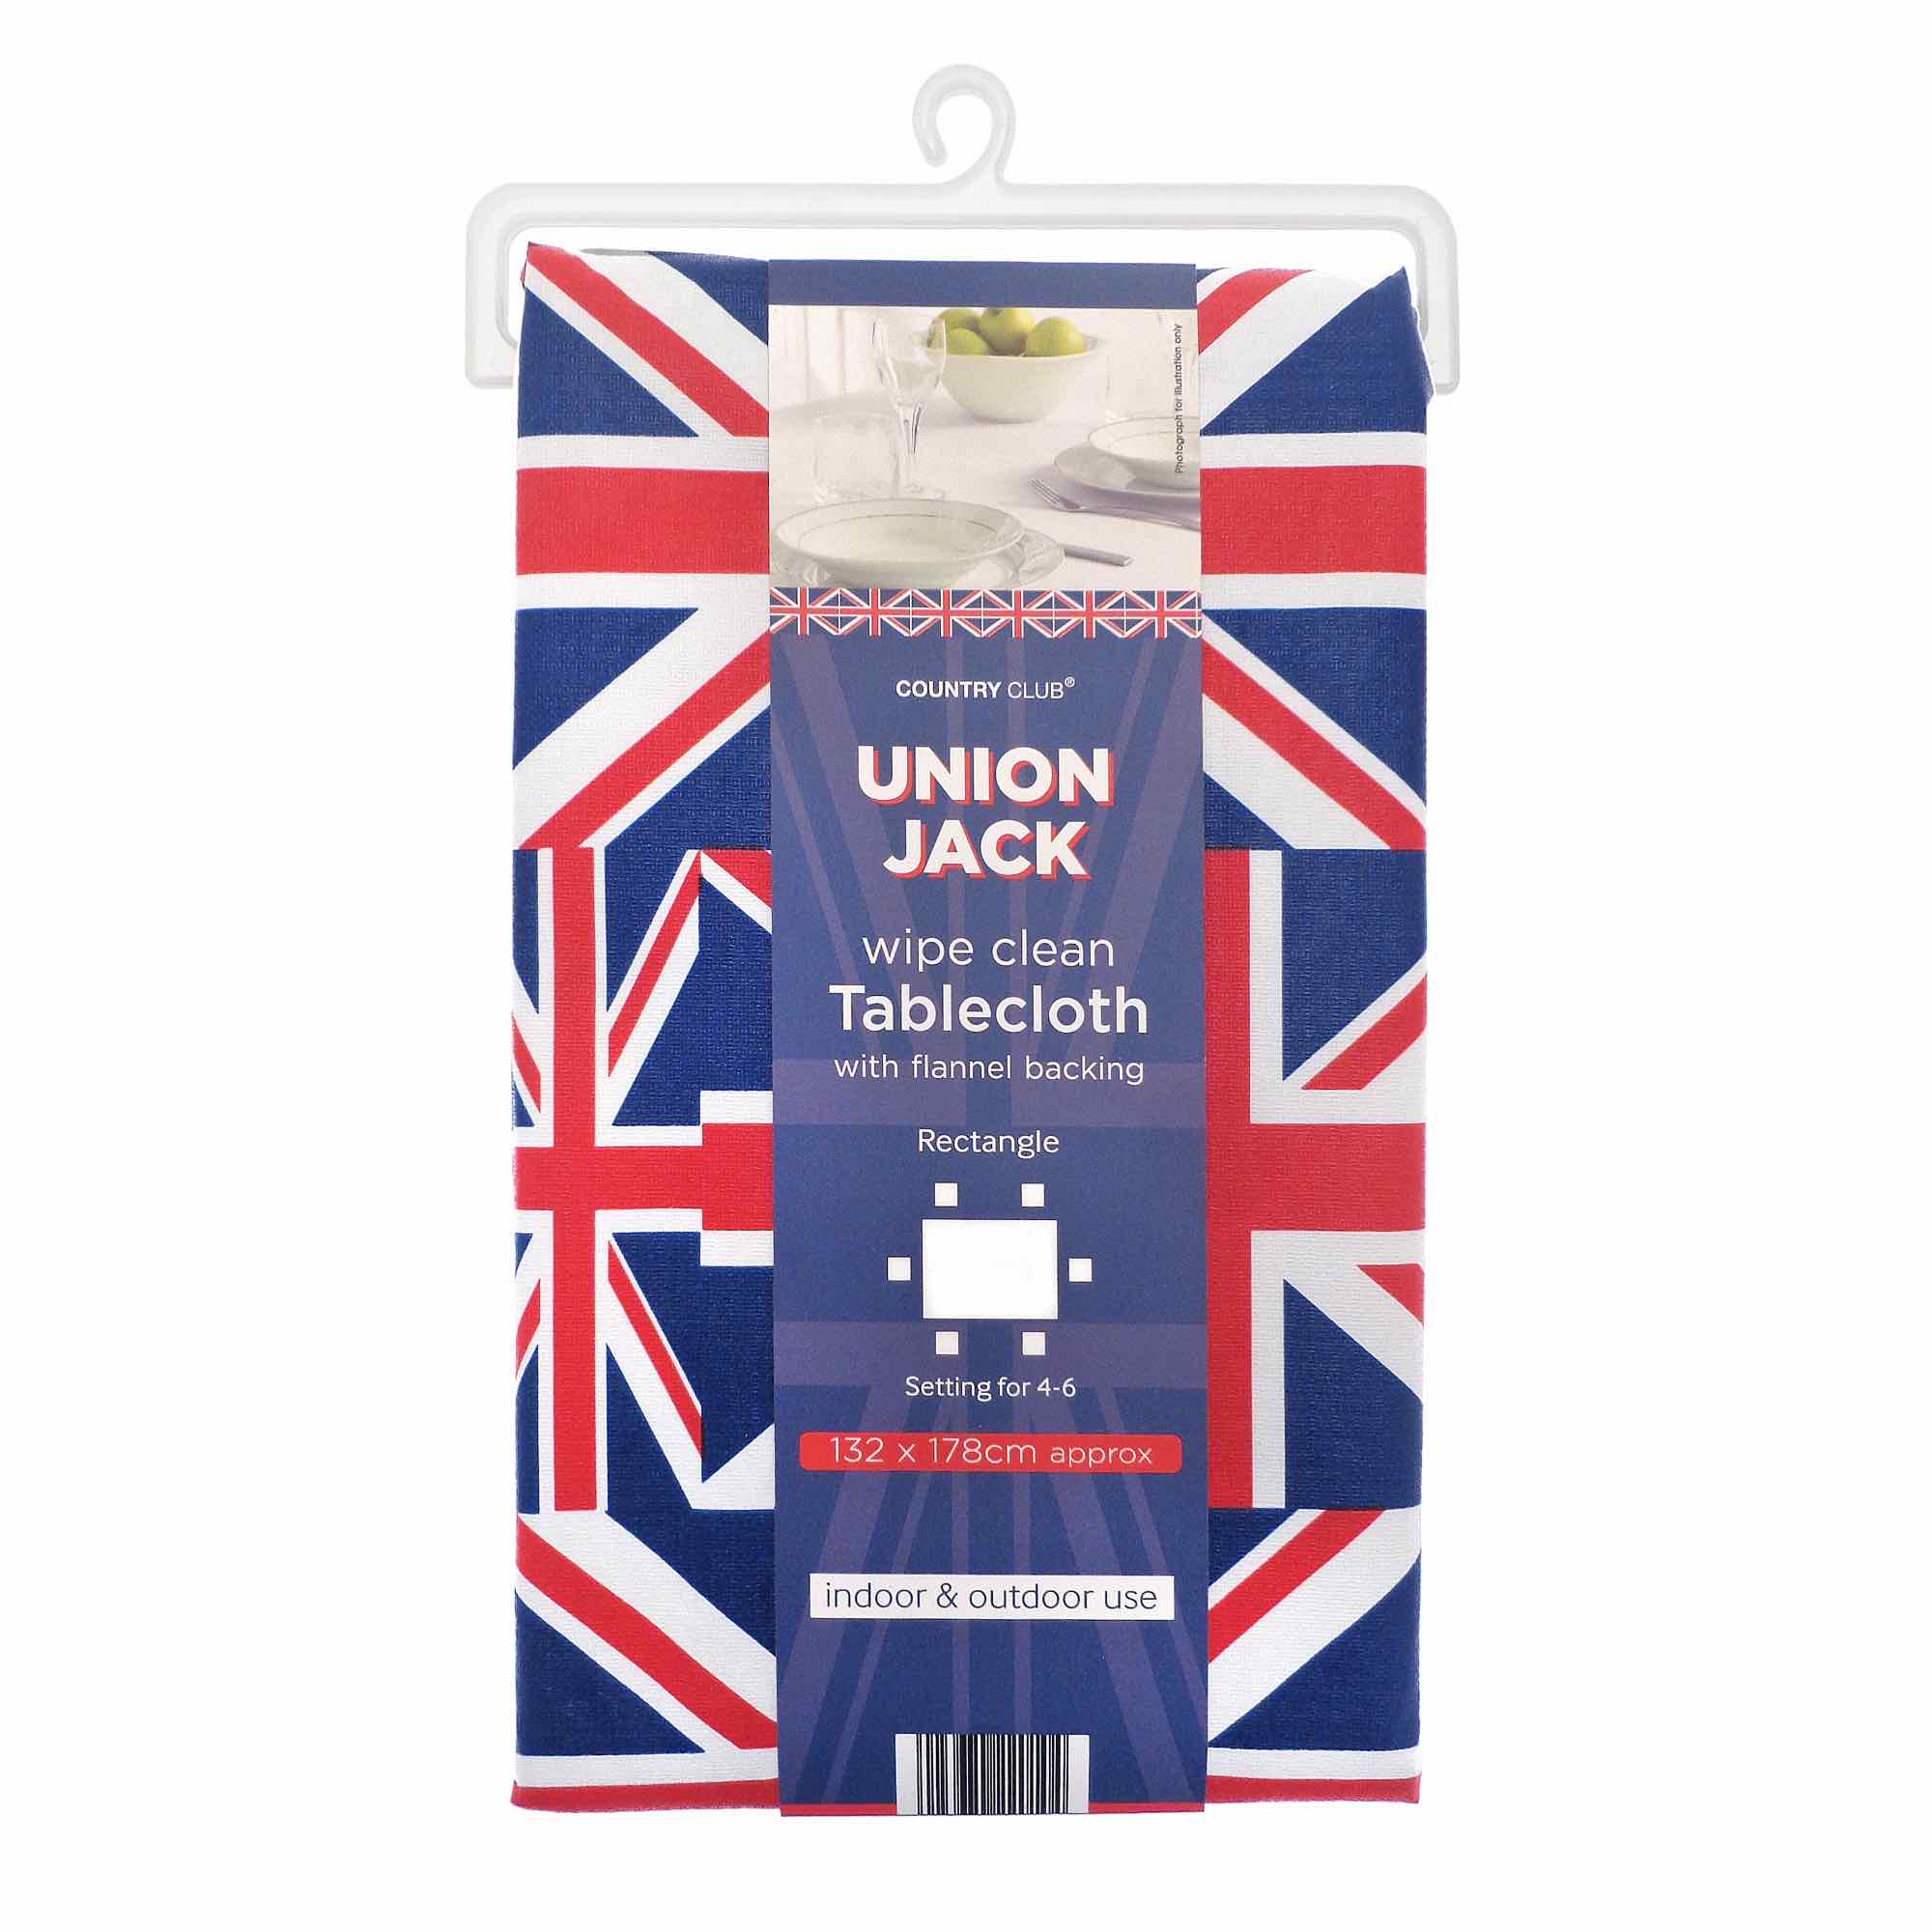 Union Jack PEVA Tablecloth (132 x 178cm)